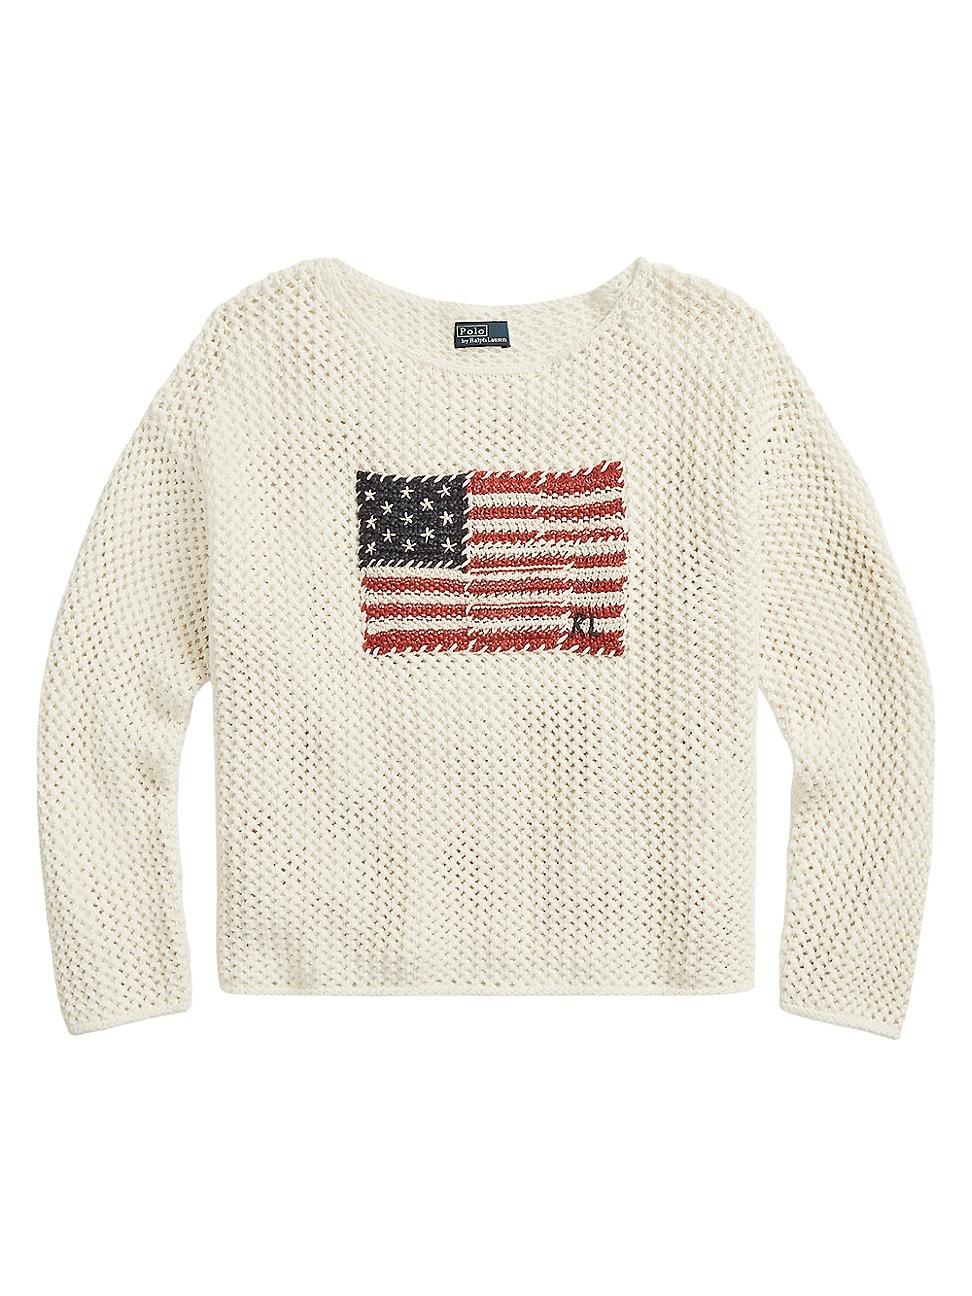 Polo Ralph Lauren Cotton Open-stitch Flag Sweater in White | Lyst